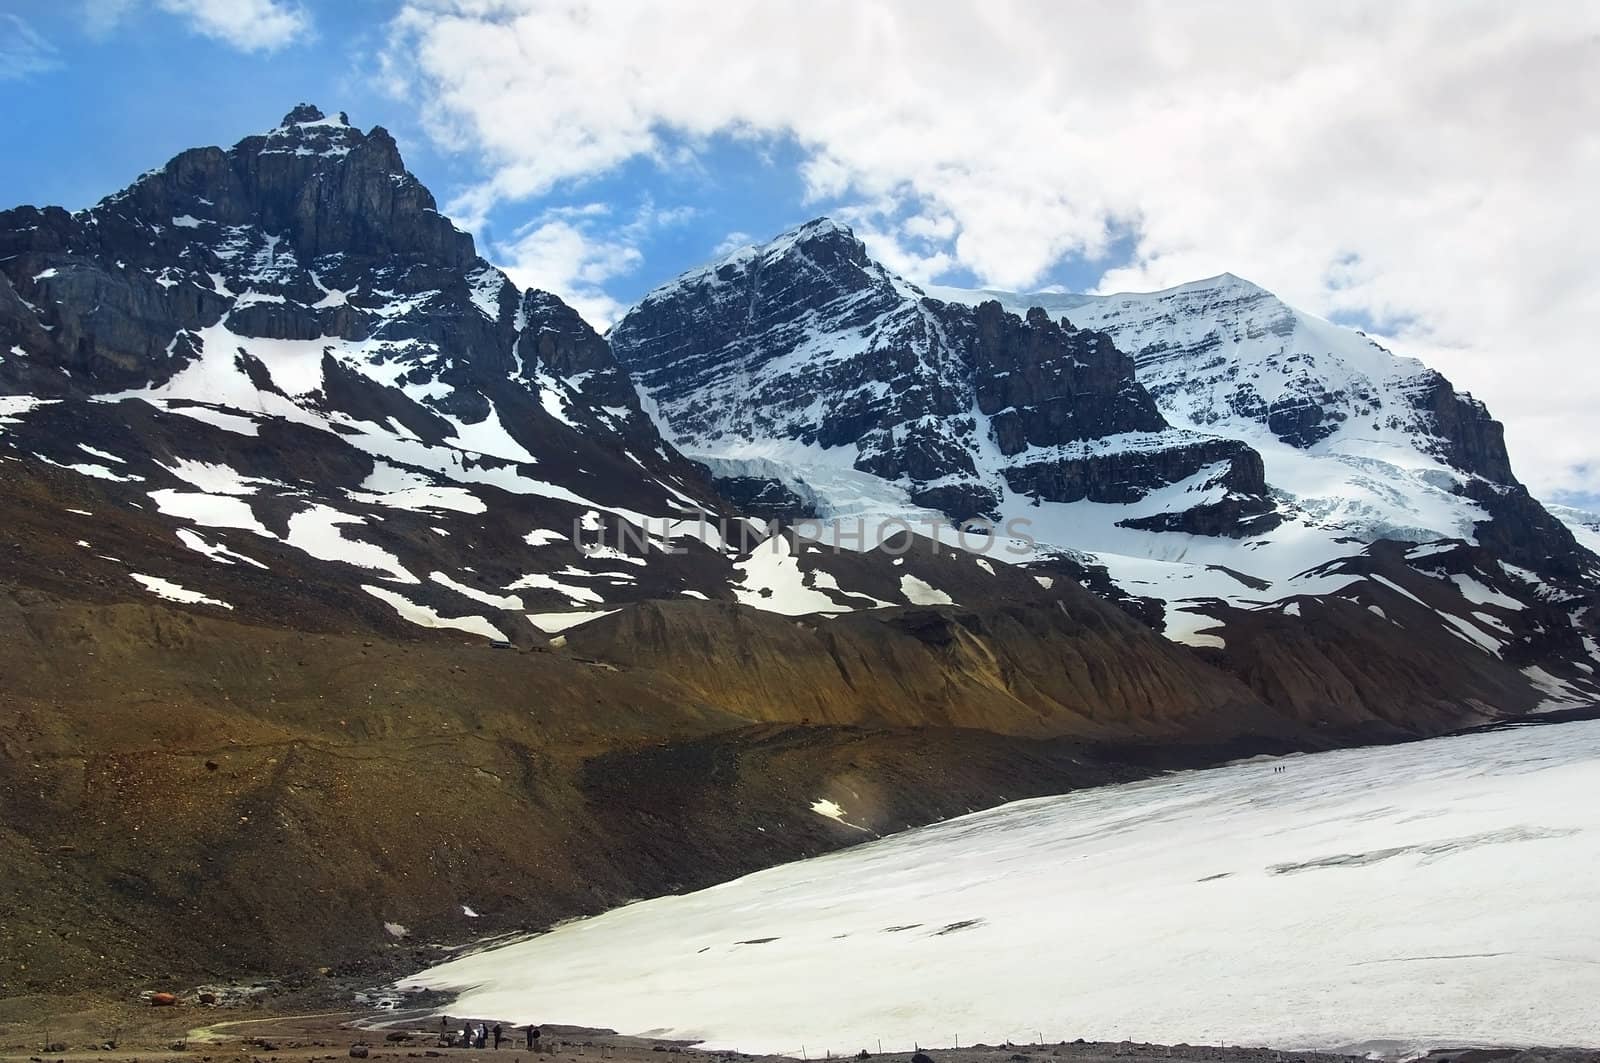 snowy peaks of the Canadian Rockies by irisphoto4